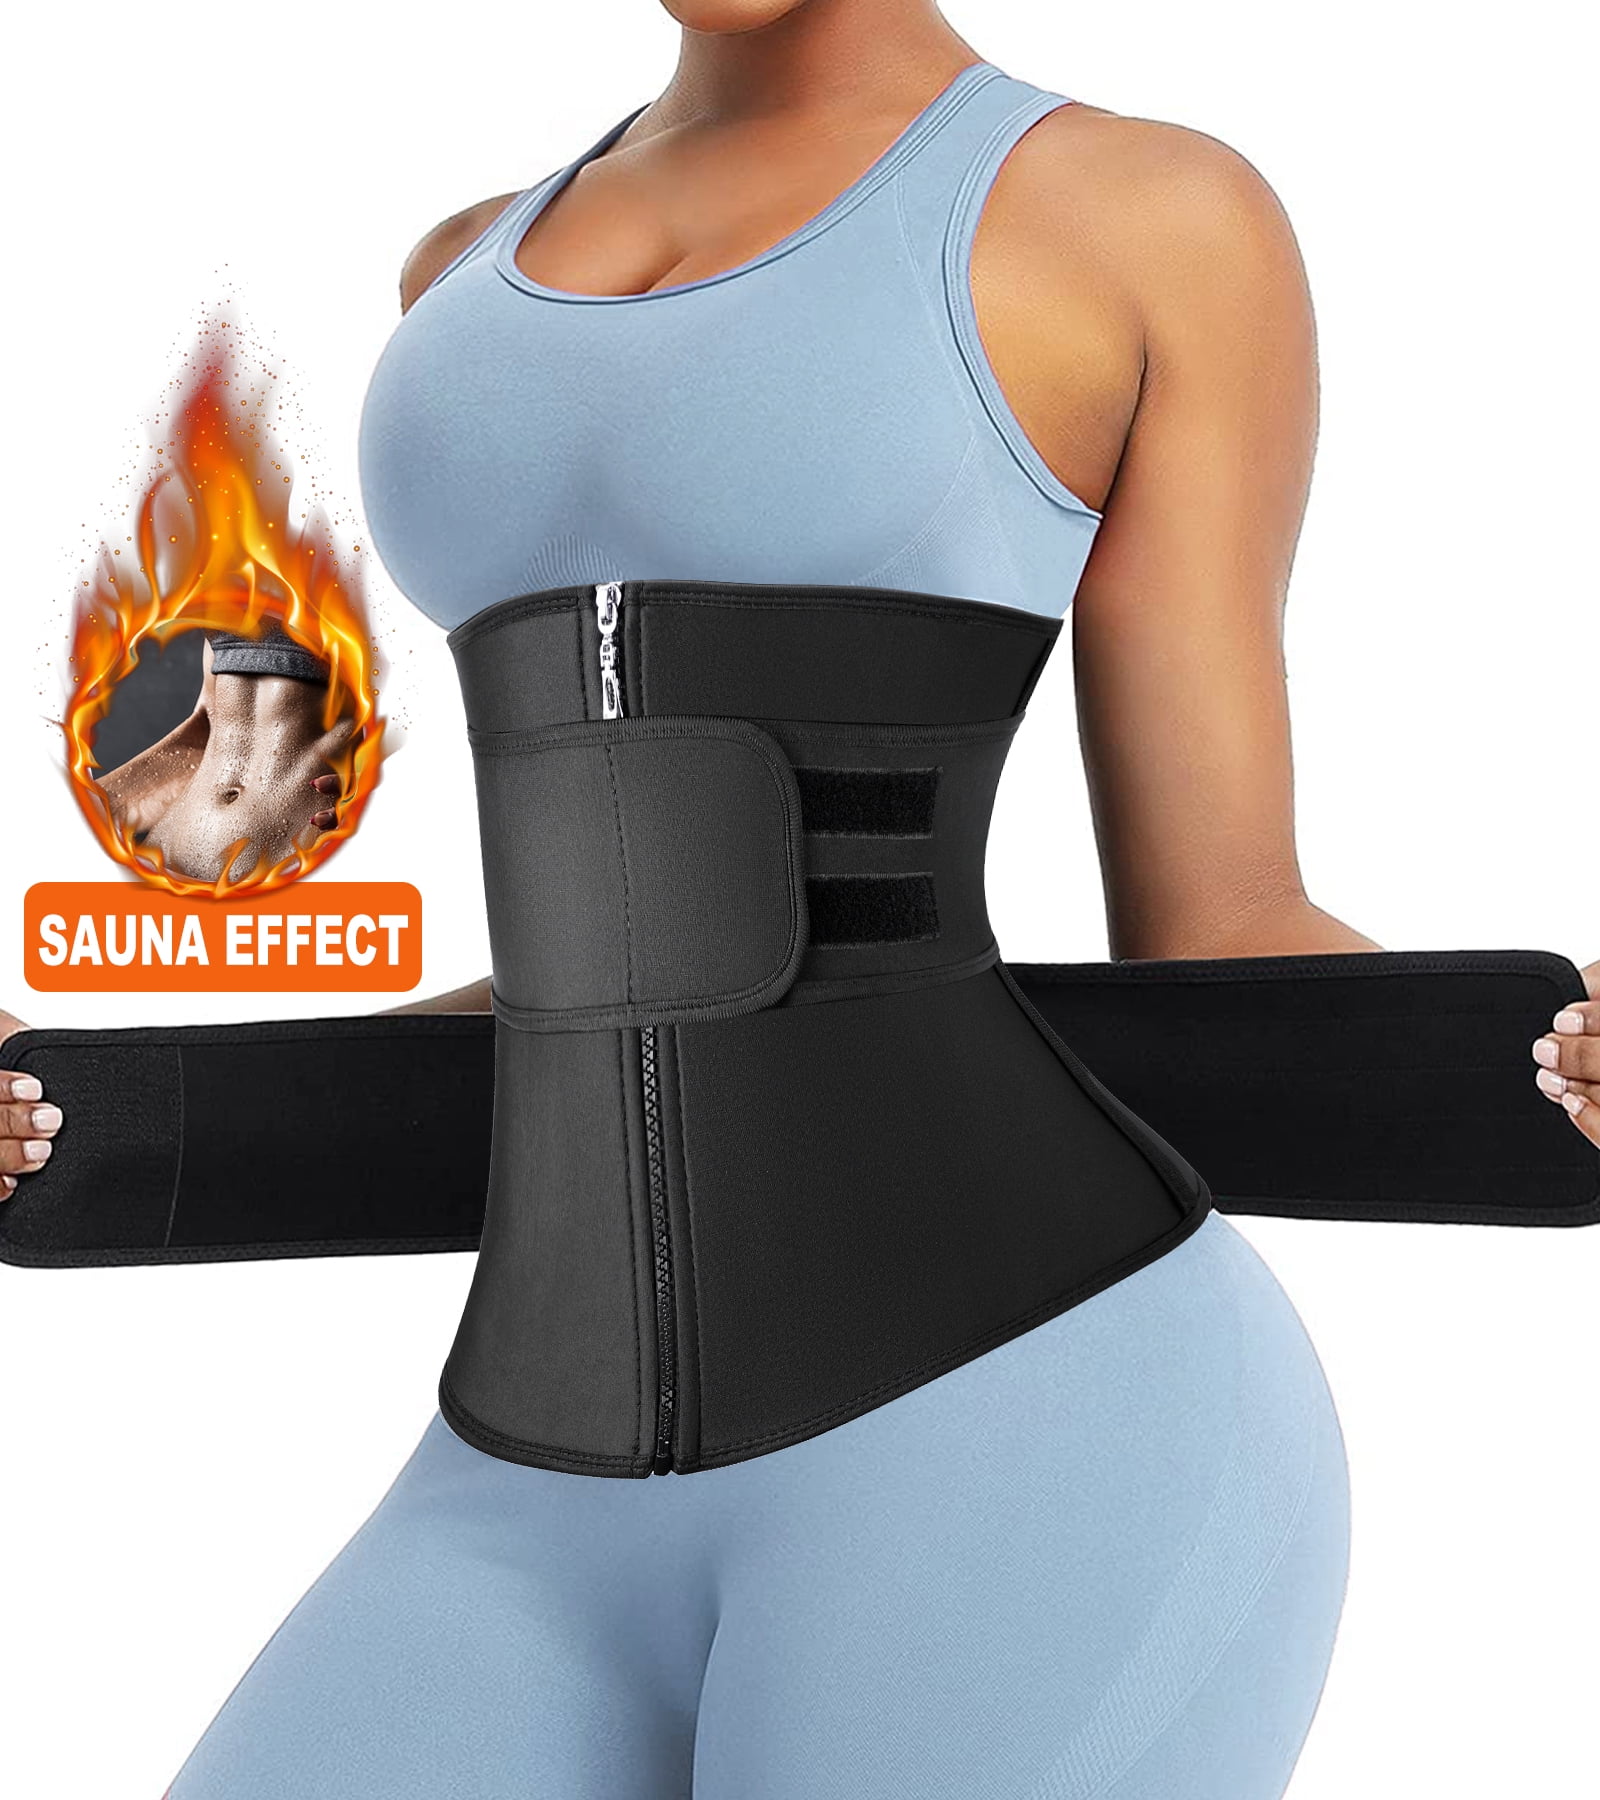 Details about   US Fajas Women Reductoras Abdomen Colombianas Sauna Suits Sweat Body Shaper Gym 